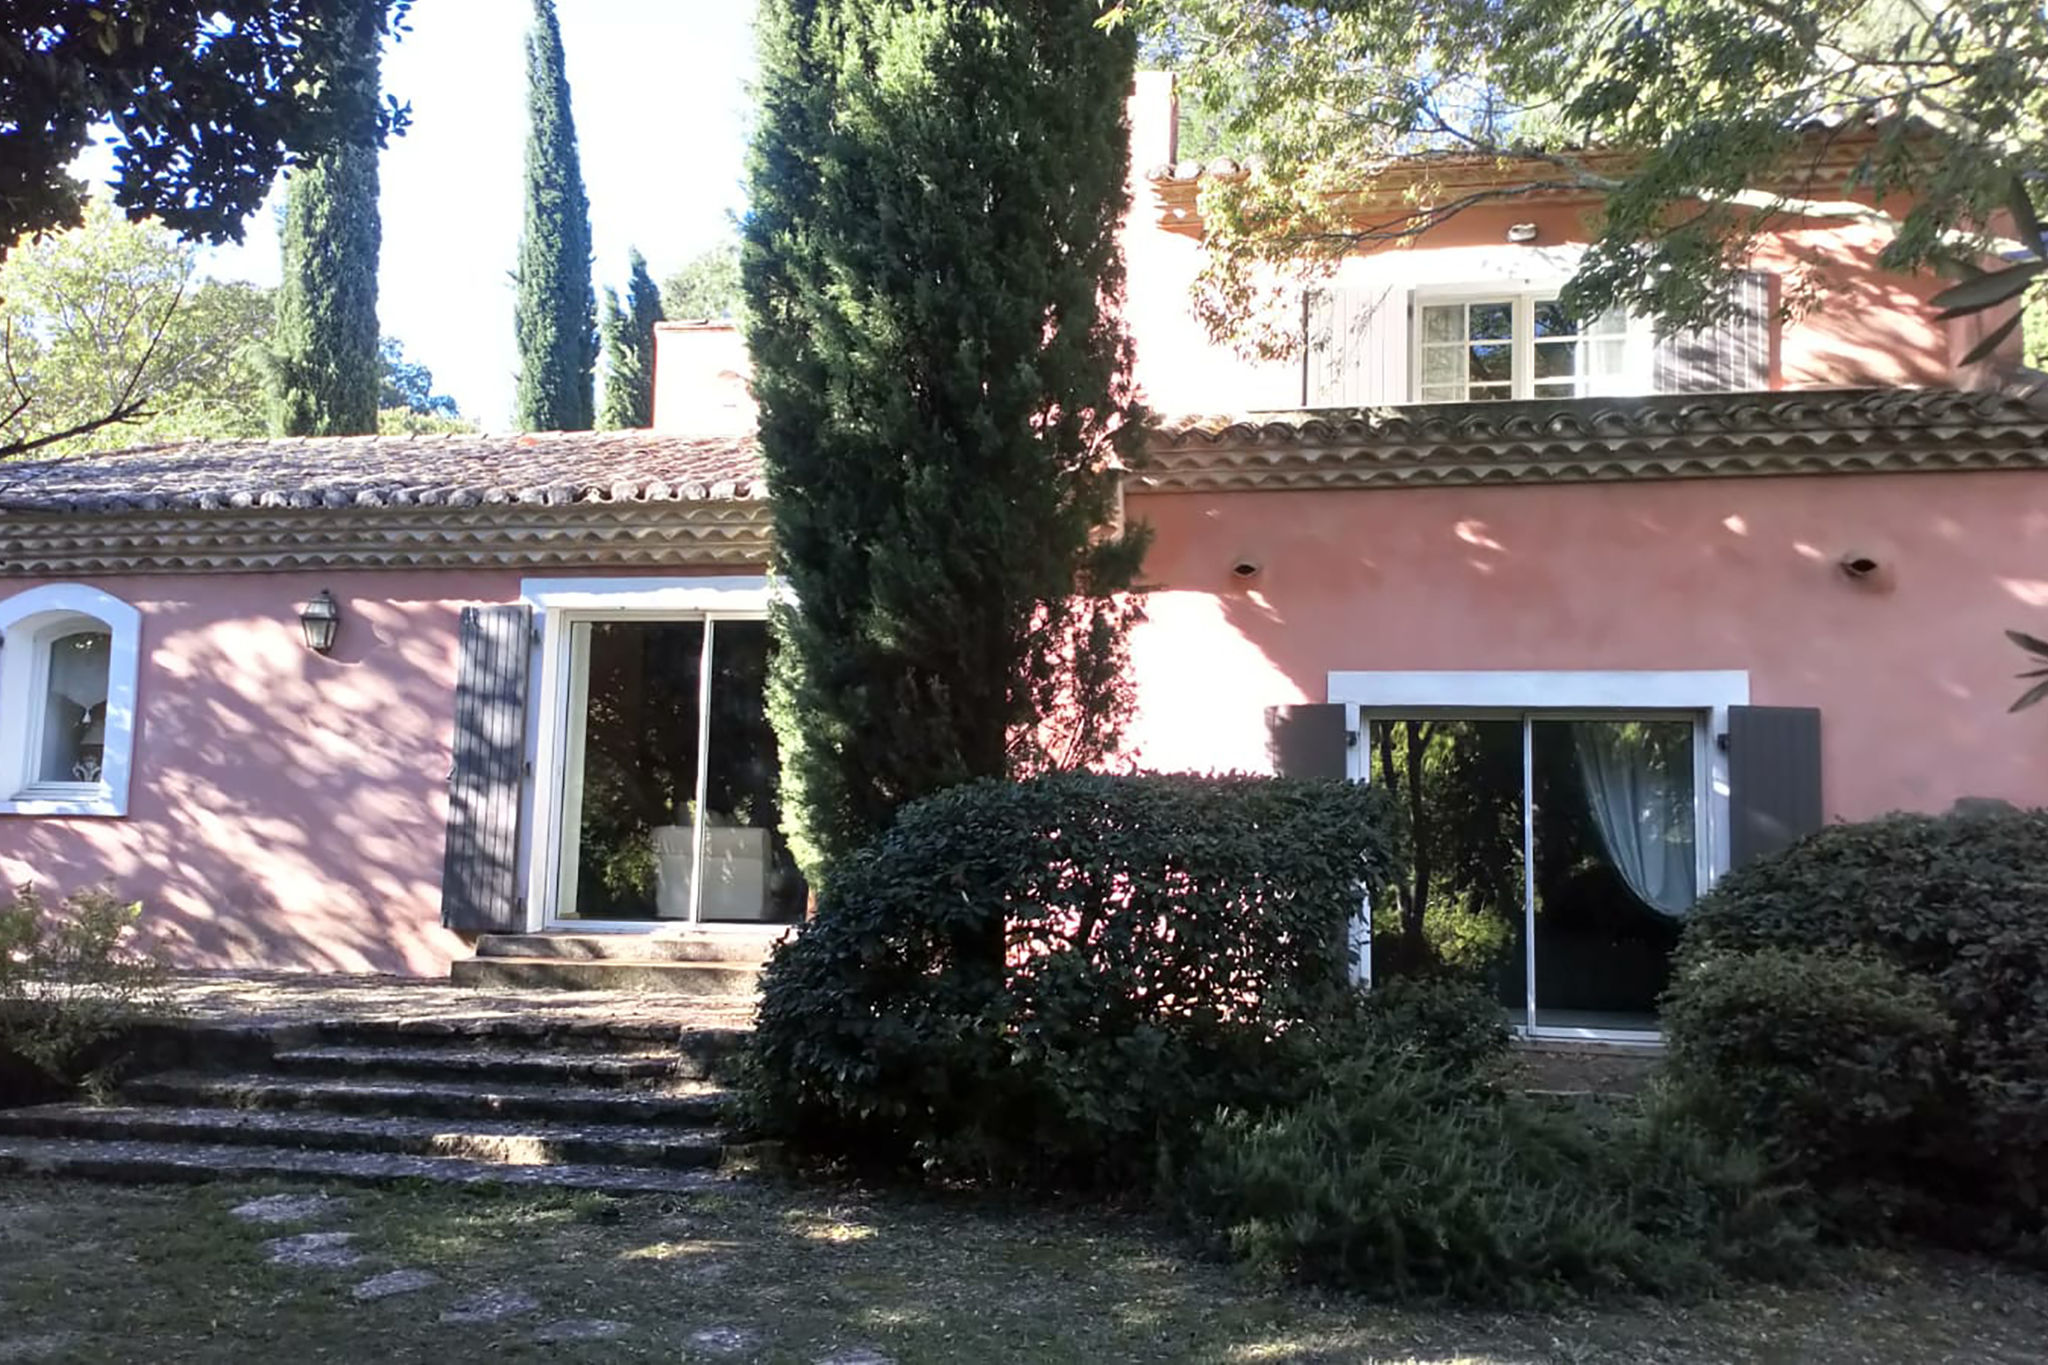 Karakteristieke villa met privézwembad dichtbij centrum Nîmes